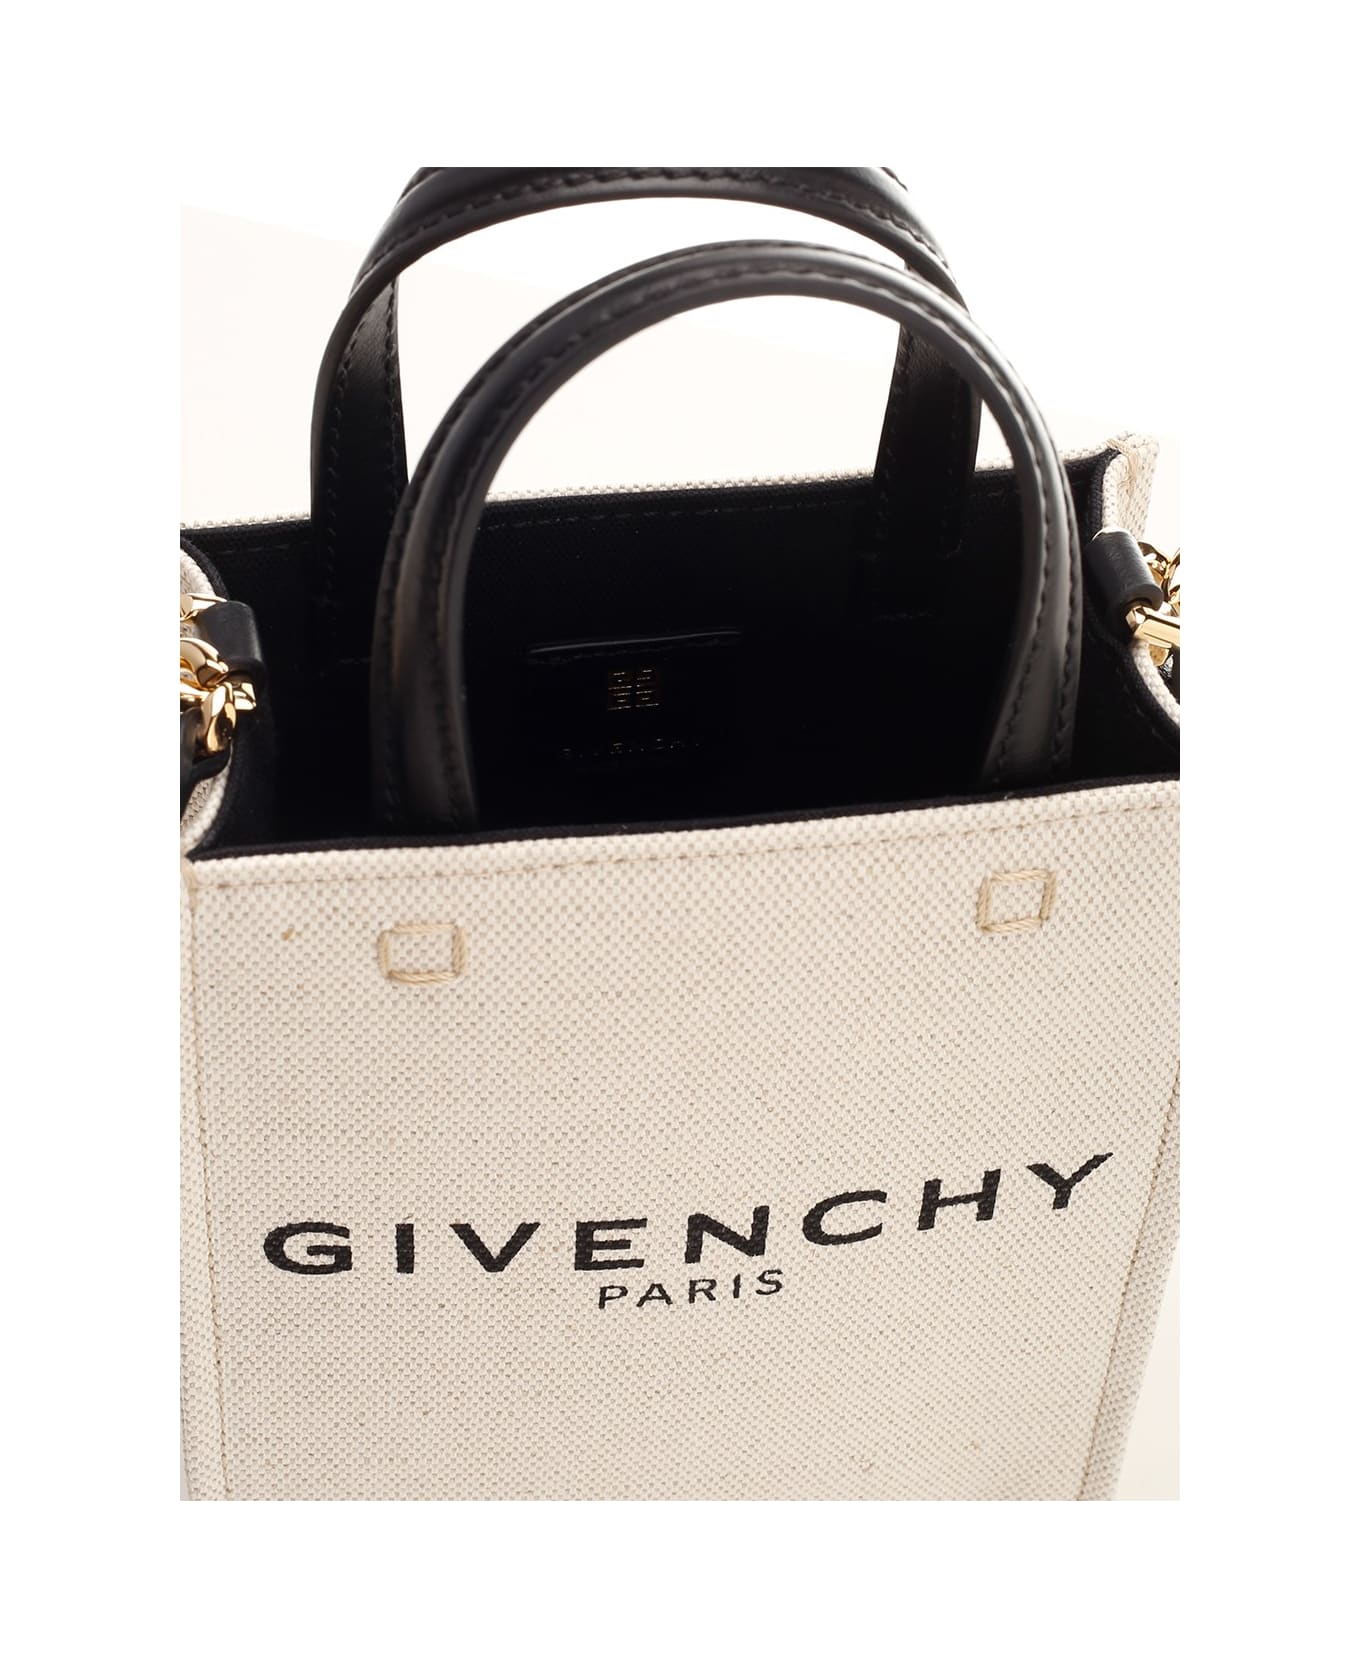 Givenchy "g Tote" Mini Bag - Beige